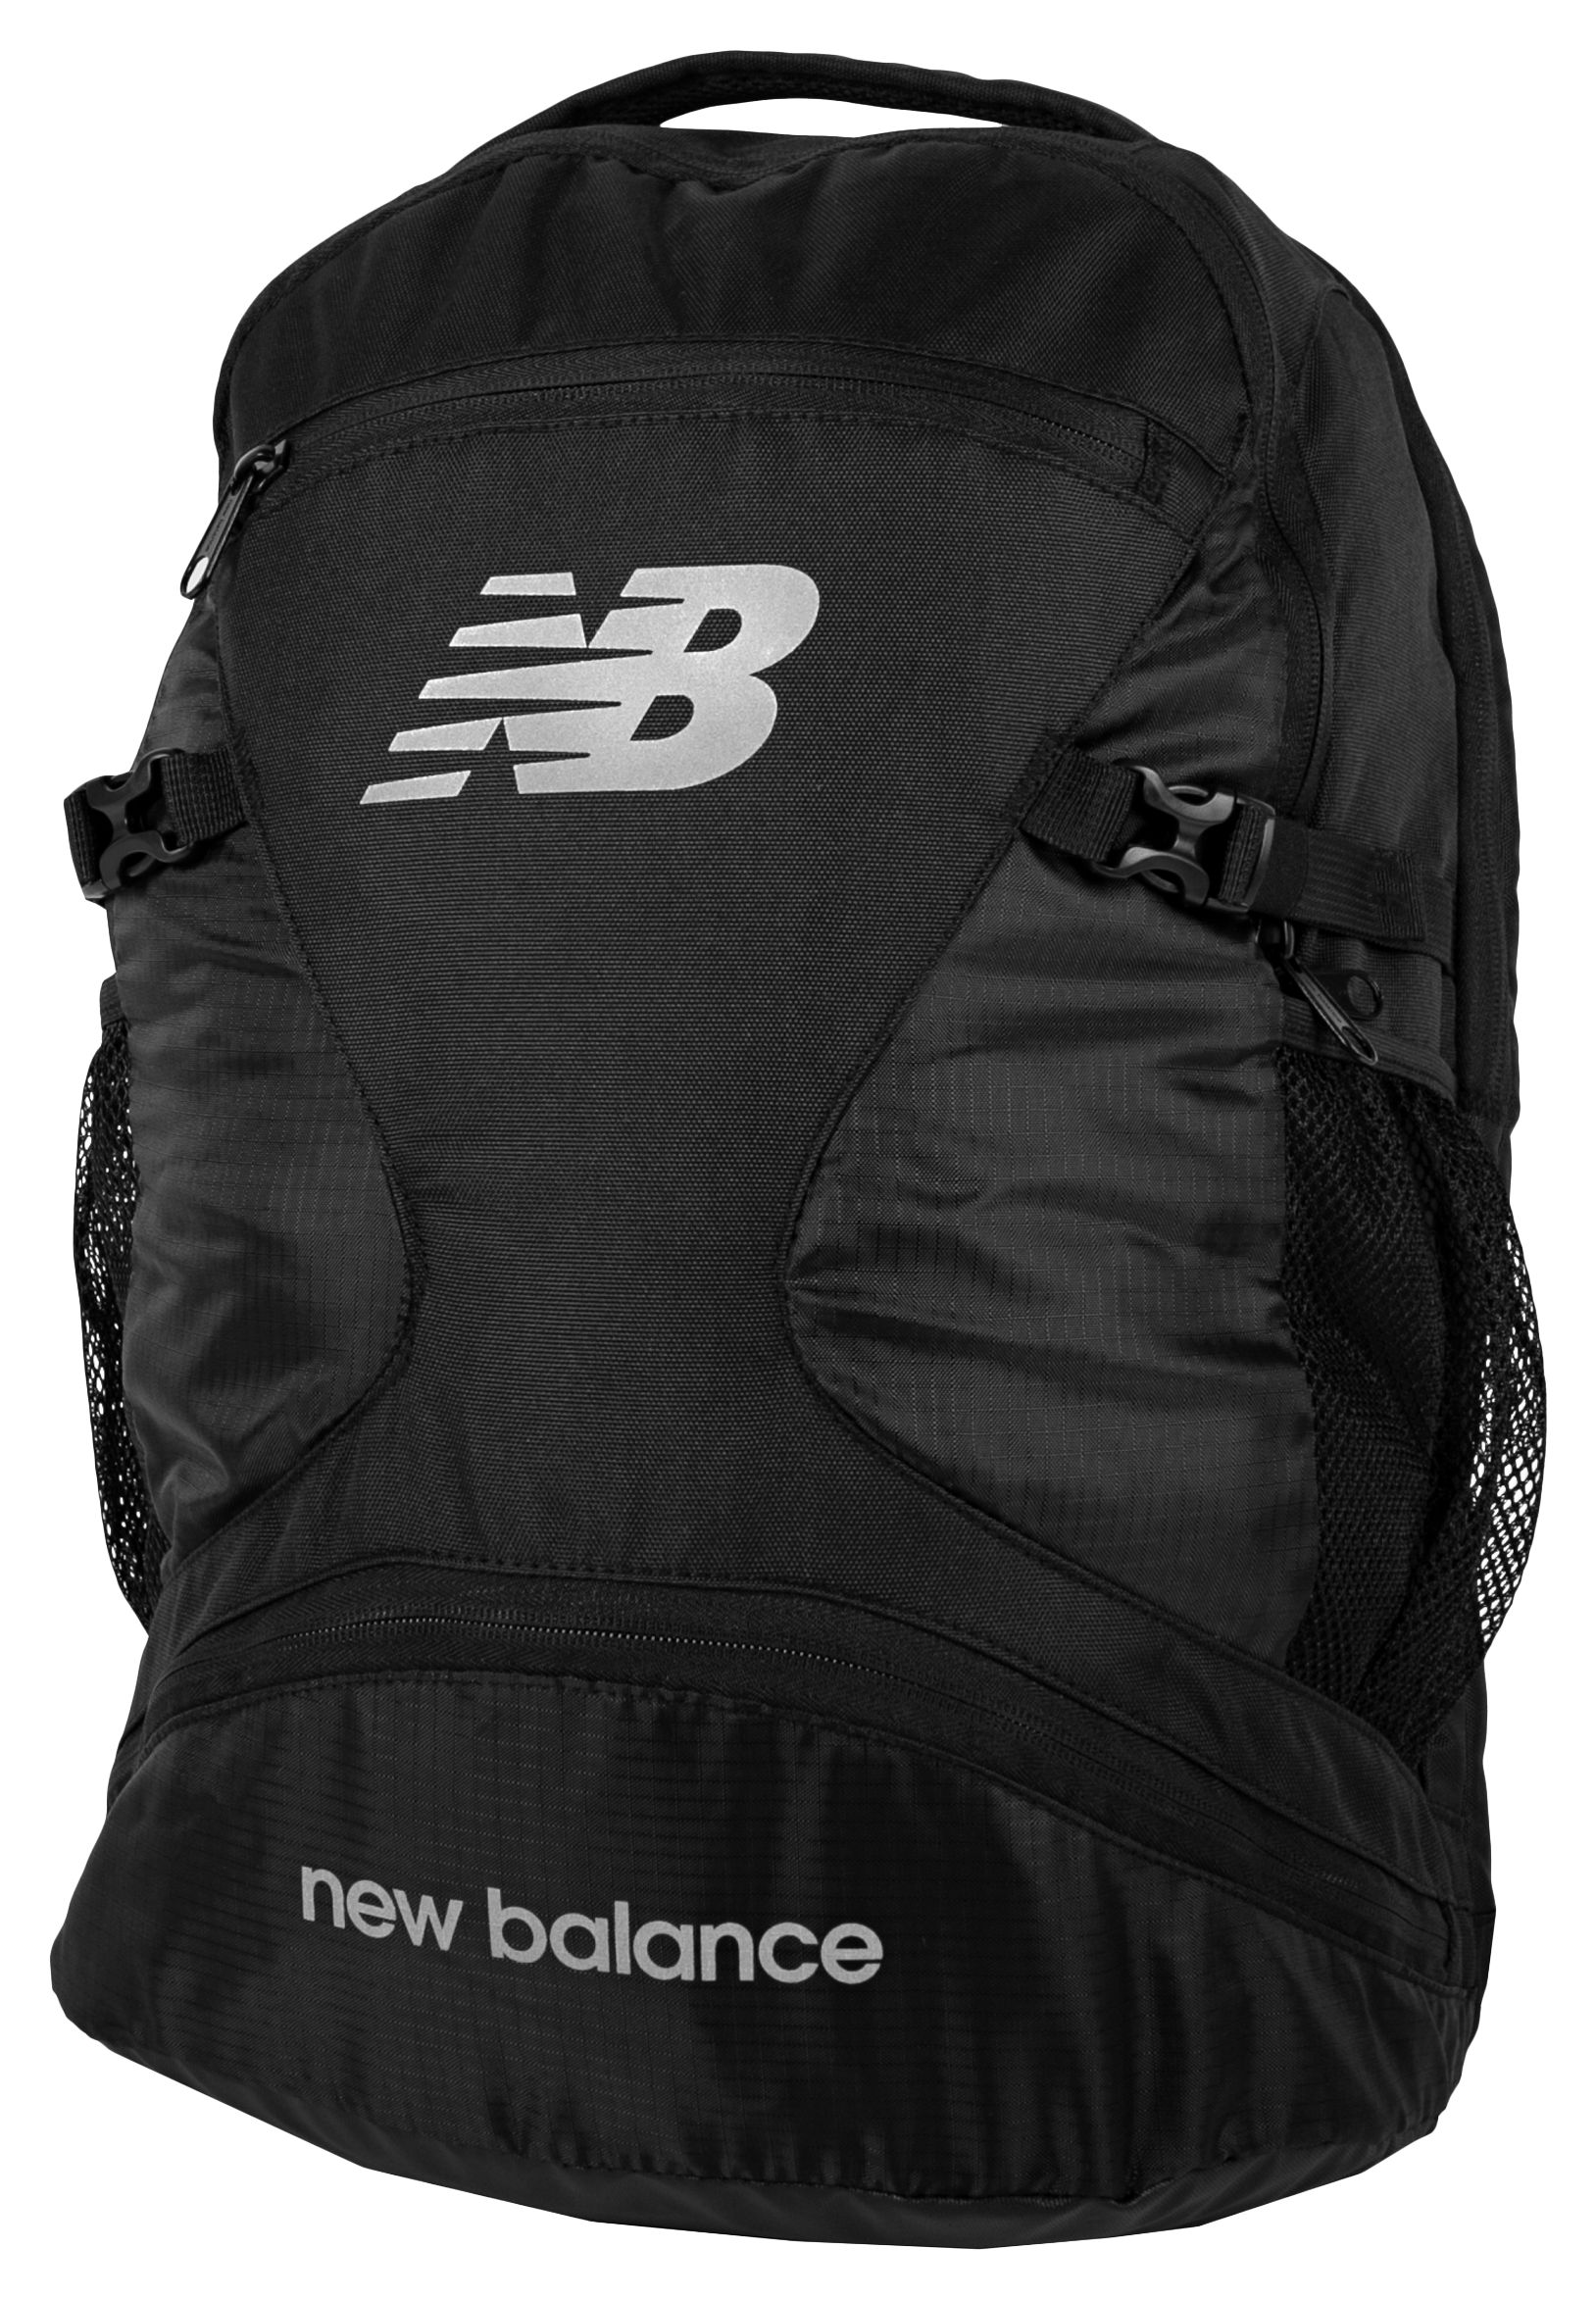 new balance backpack price